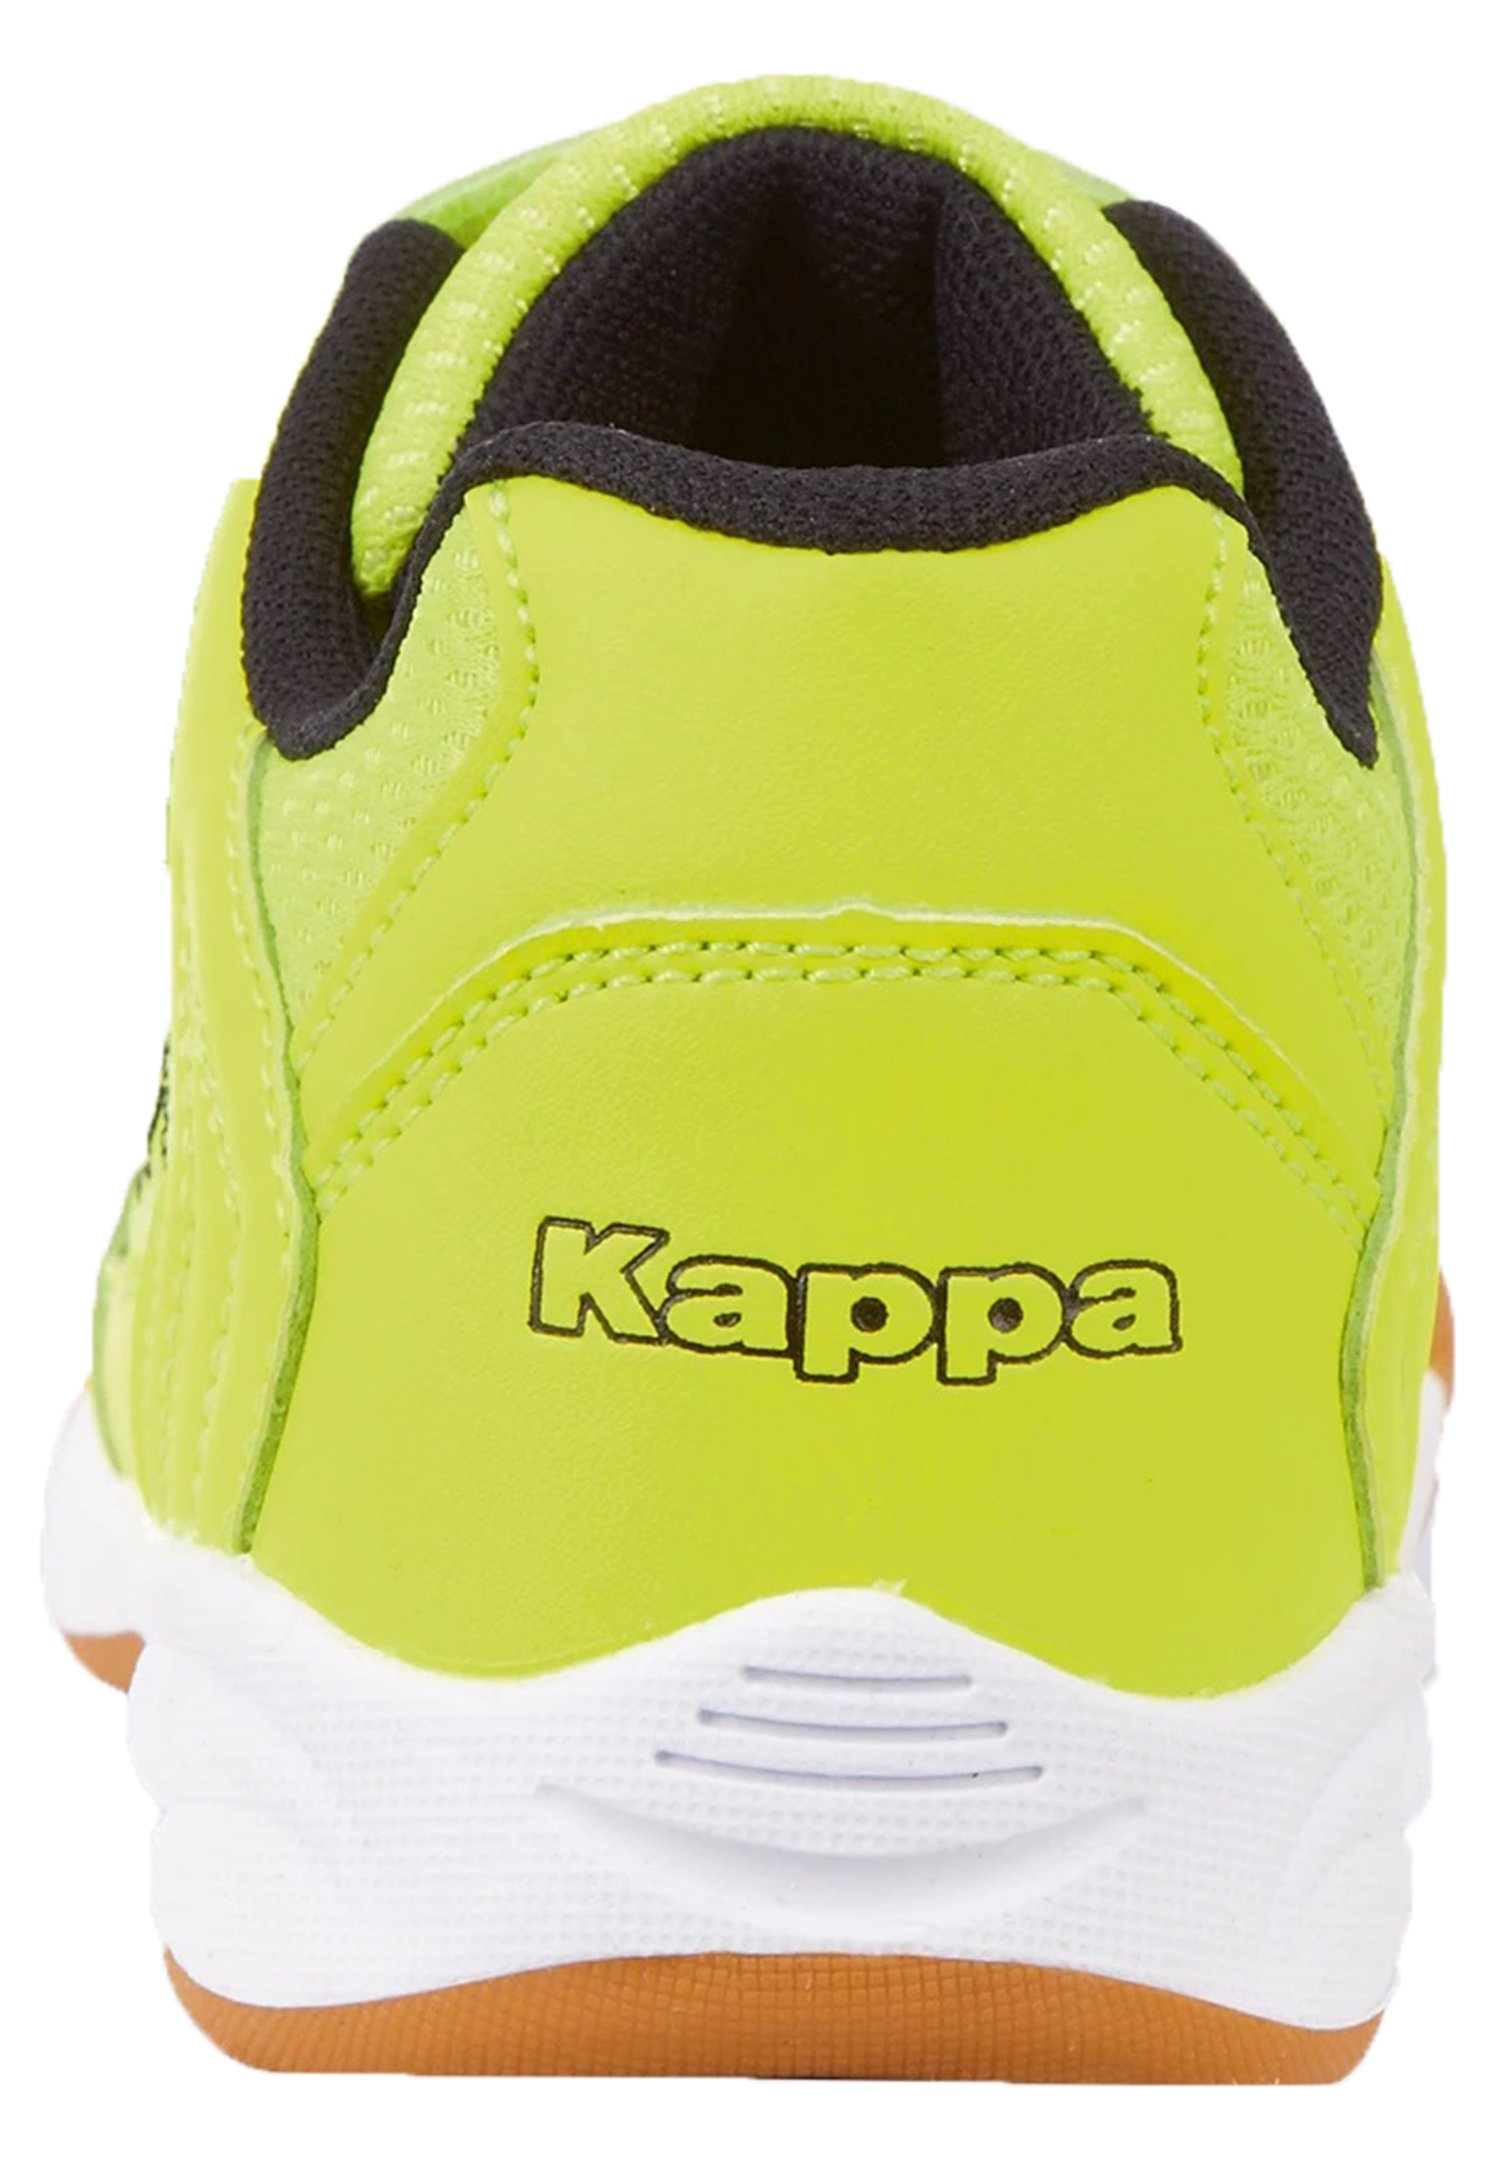 Kappa Kinder Sneaker Turnschuh 260765K 4011 gelb/schwarz